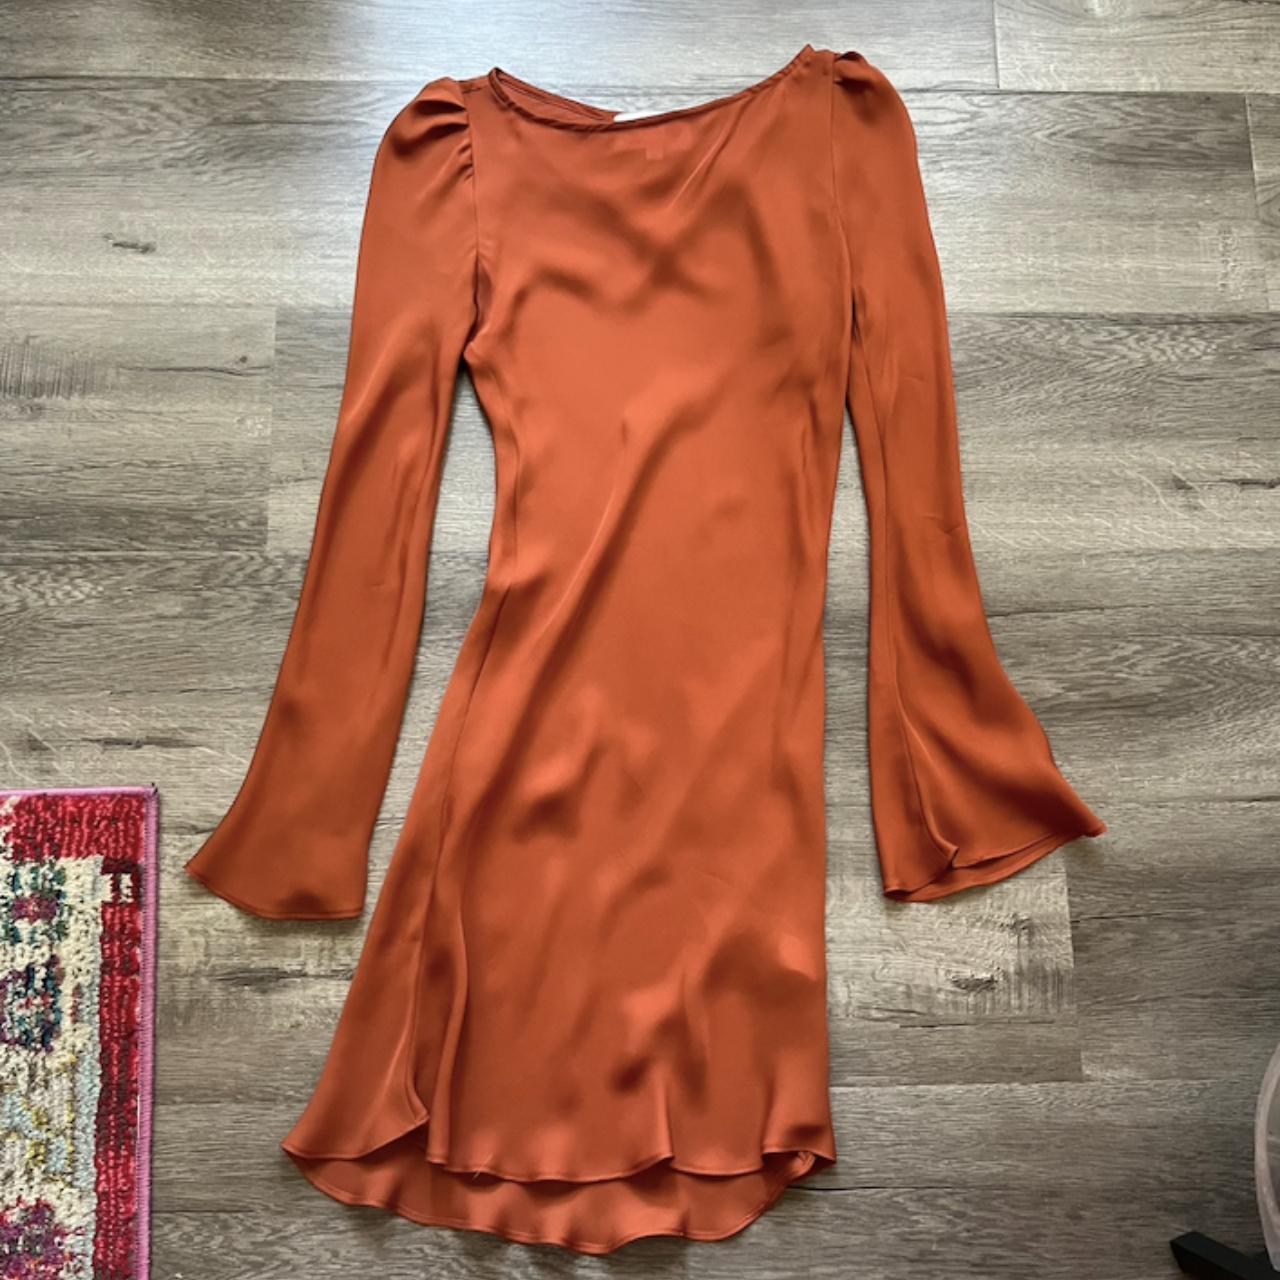 Stone Cold Fox Women's Orange Dress (7)